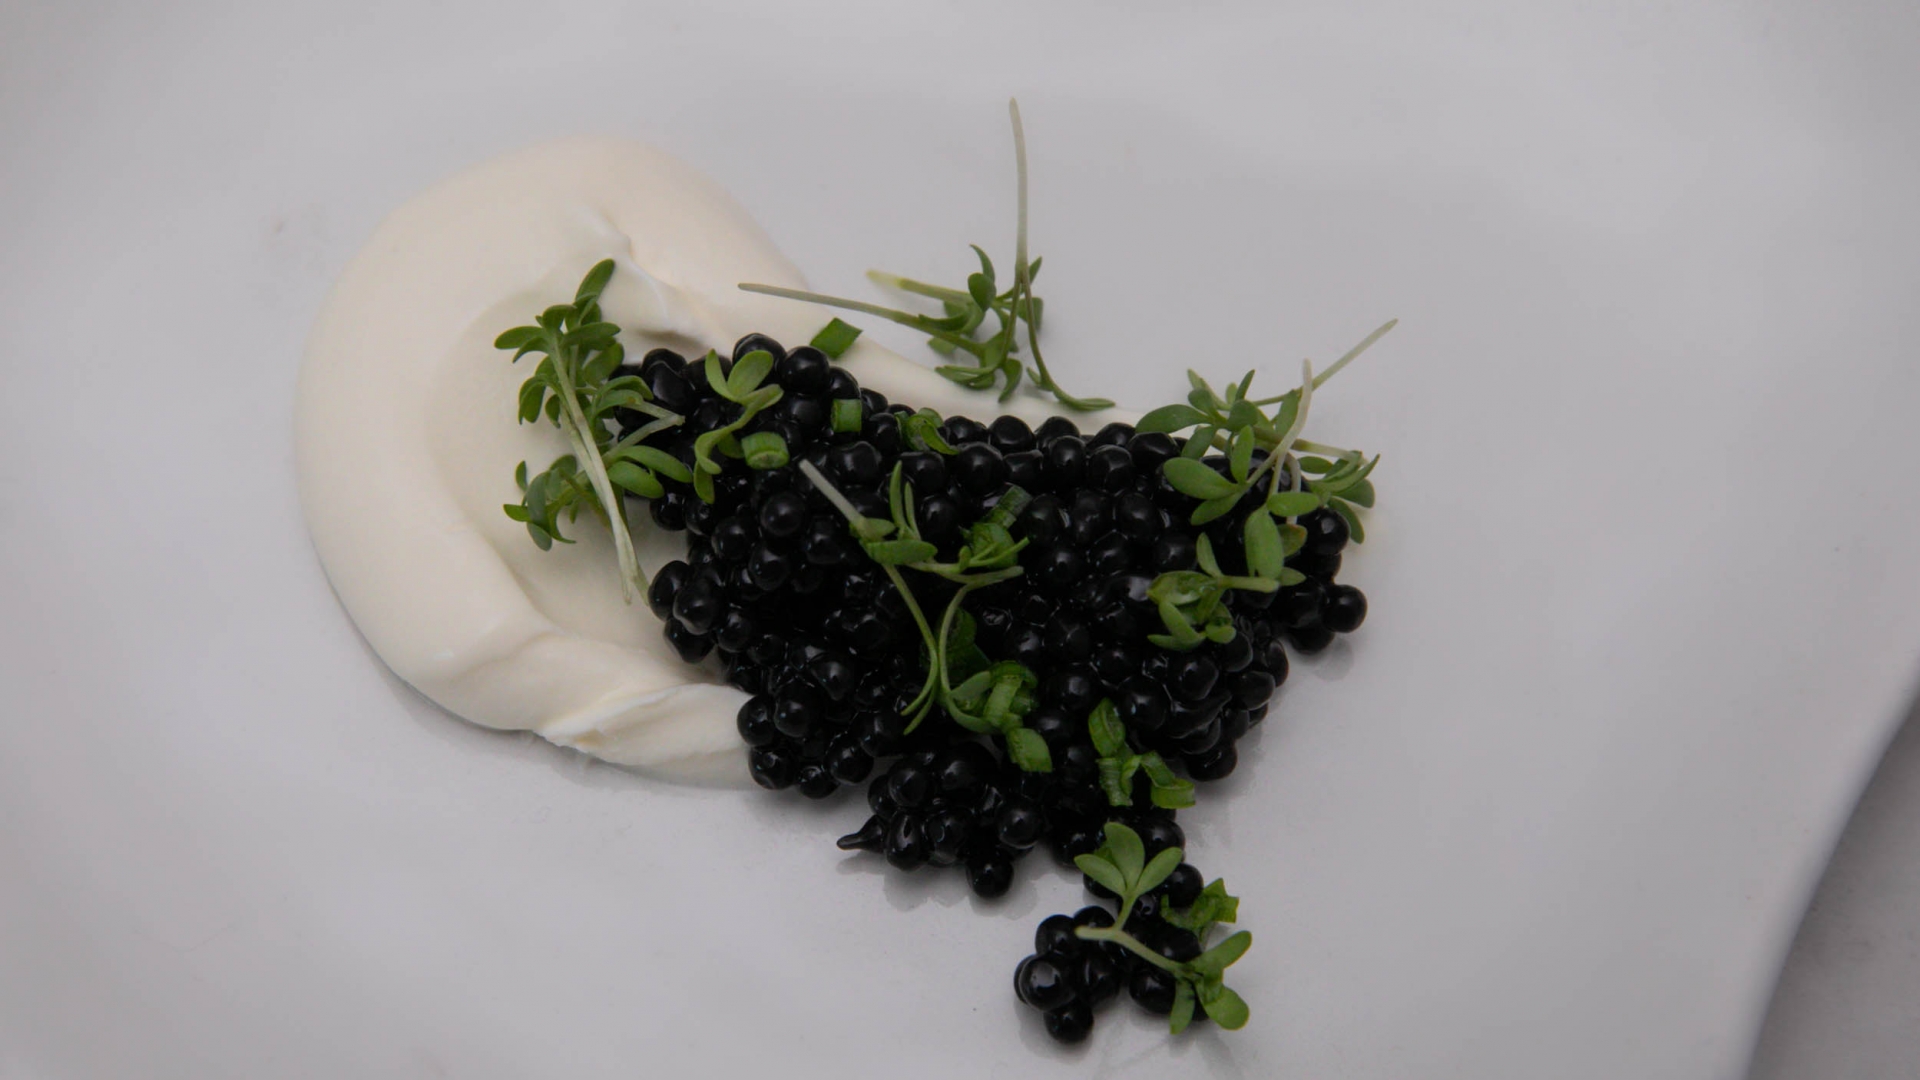 Vegan caviar and cress on sour cream